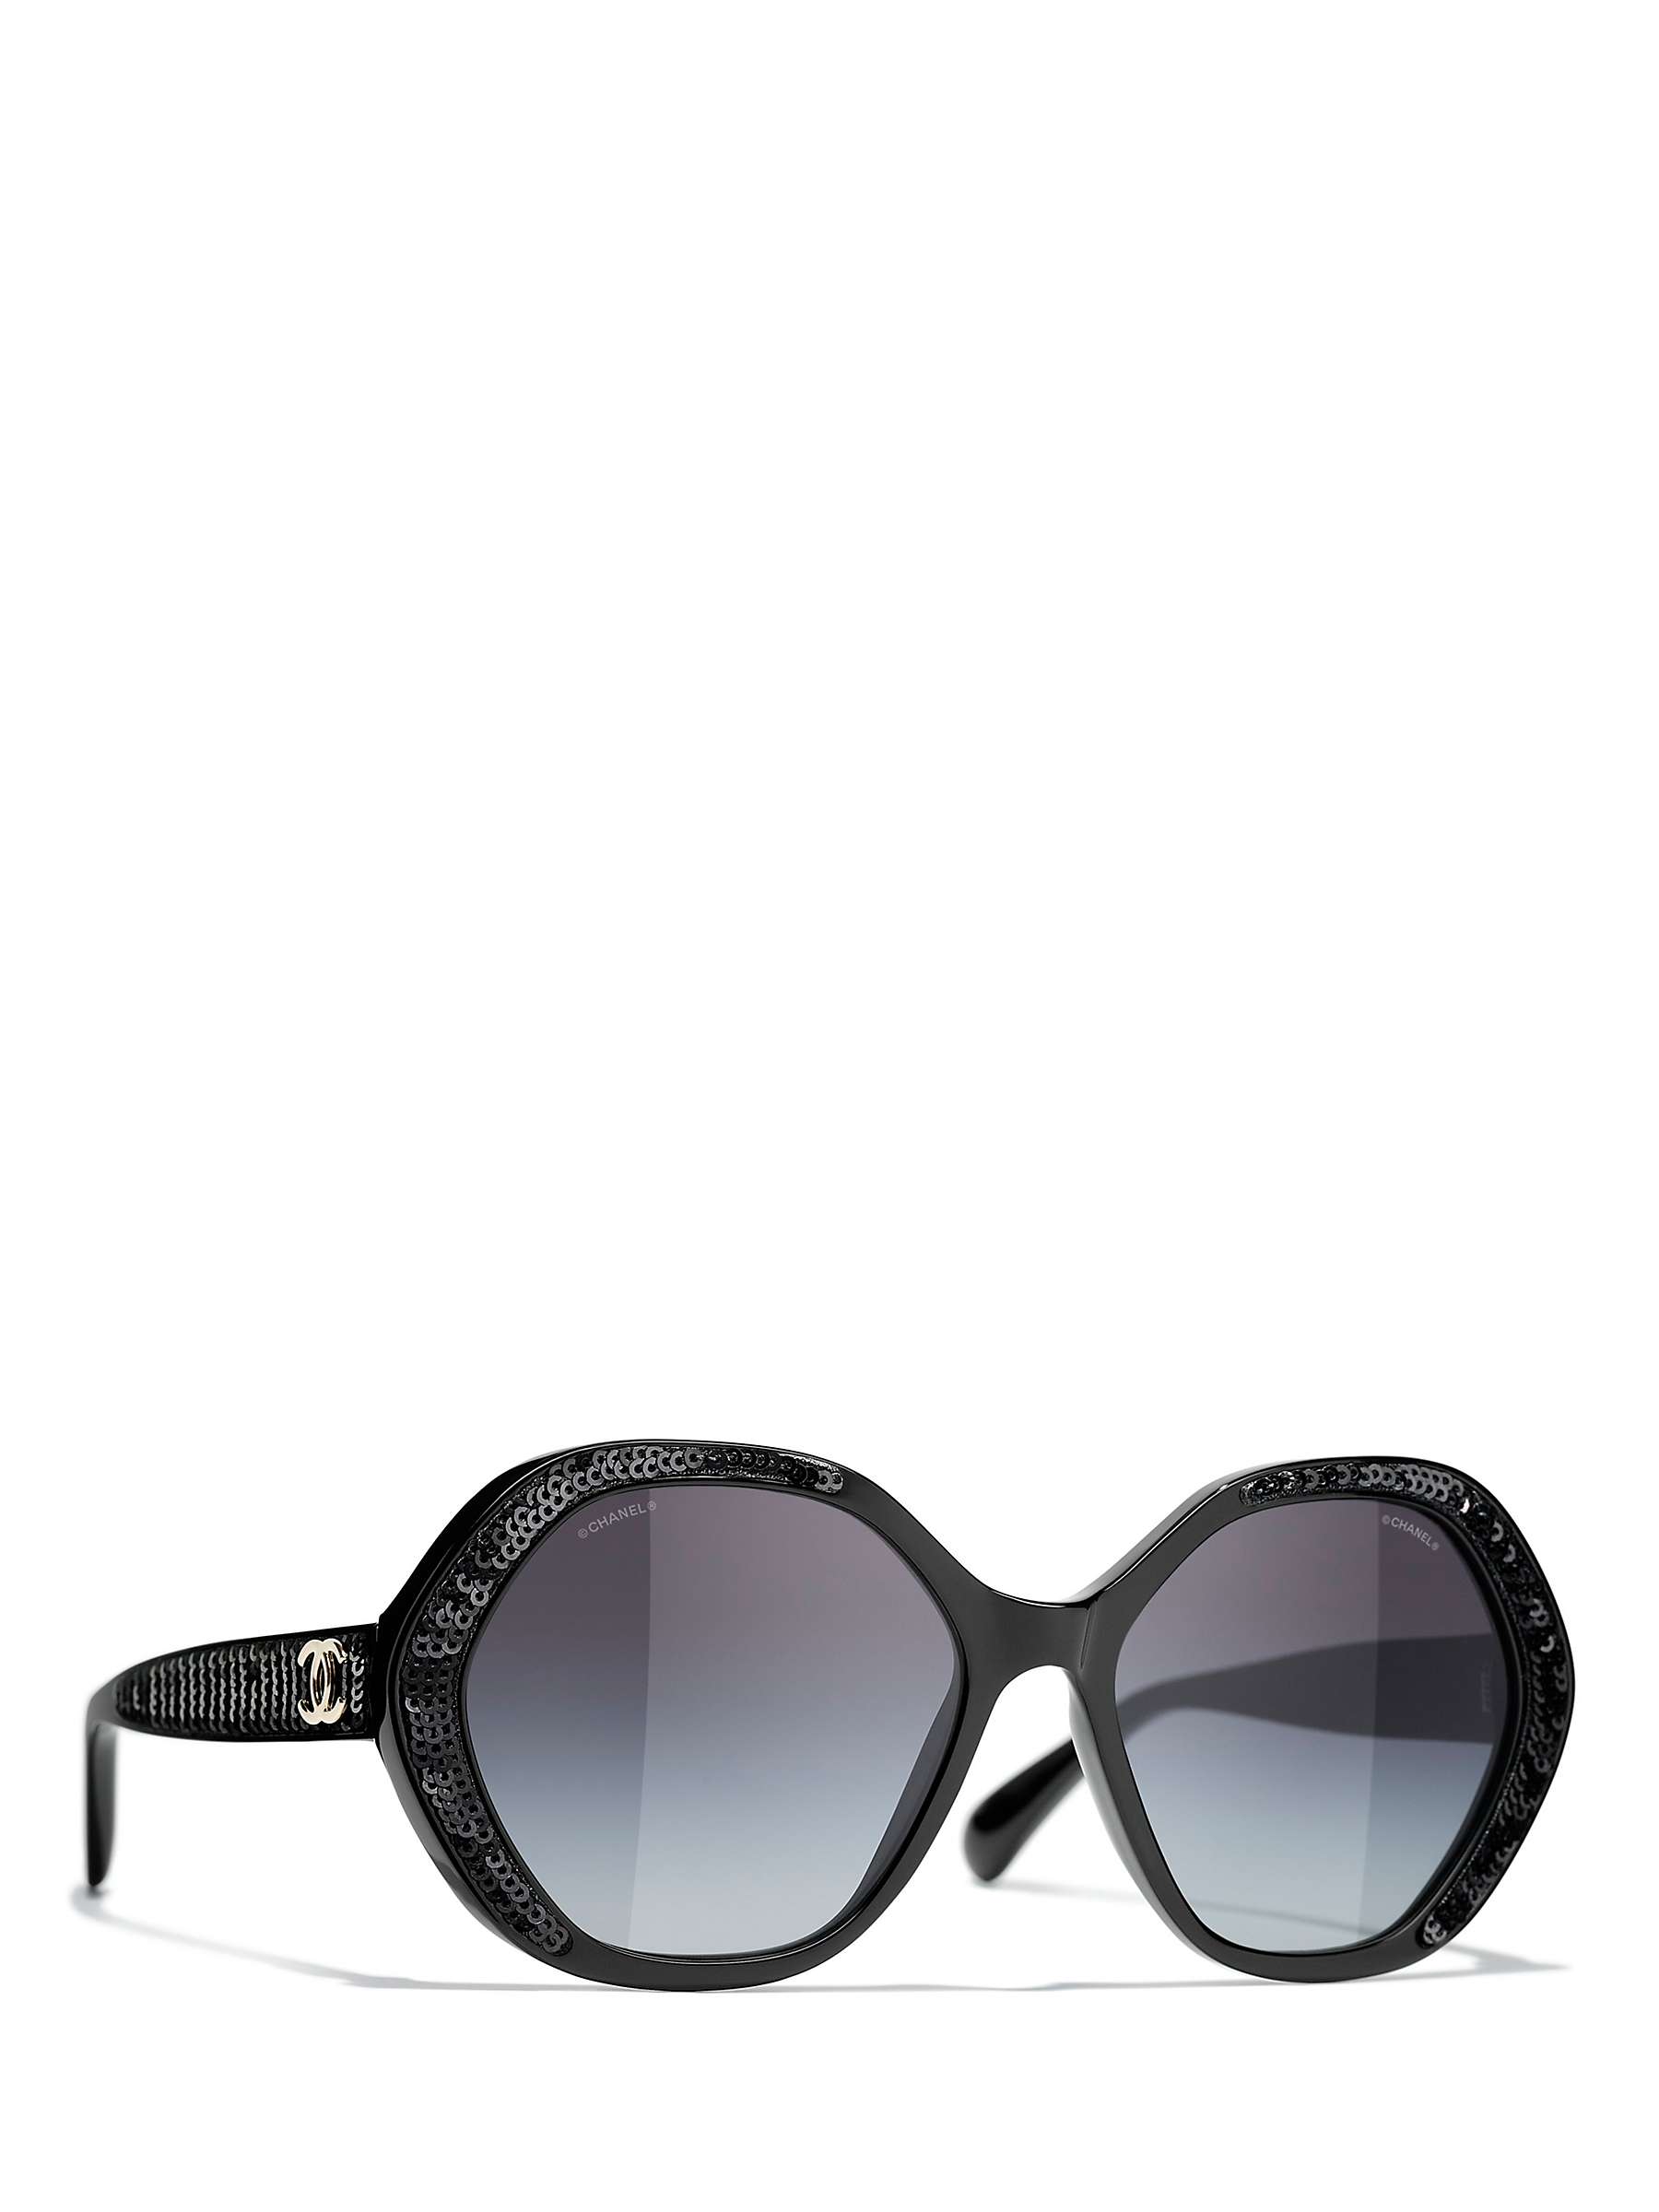 Buy CHANEL Irregular Sunglasses CH5451 Shiny Black/Grey Gradient Online at johnlewis.com